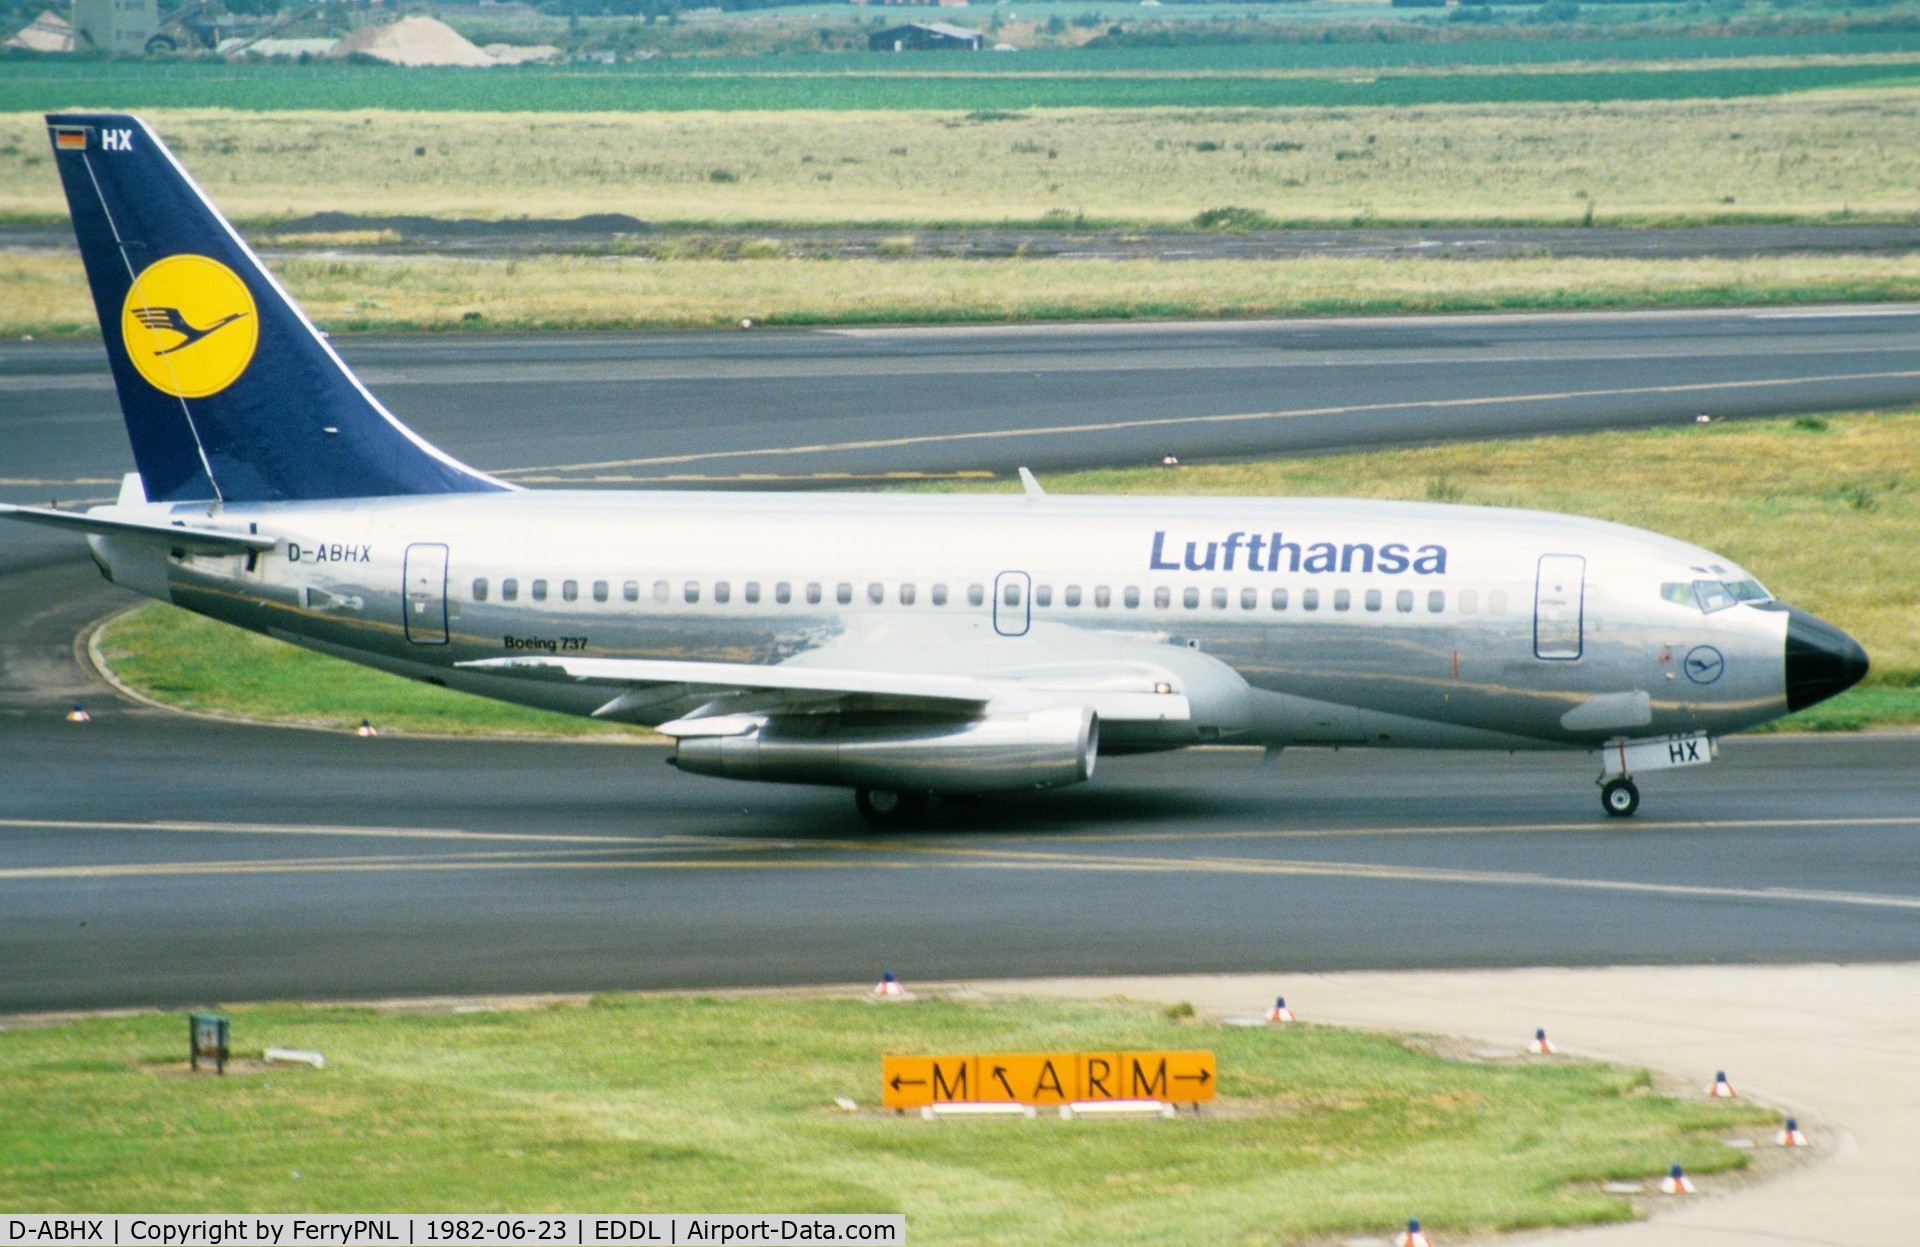 D-ABHX, 1982 Boeing 737-230 C/N 22637, Lufthansa B732 in silver